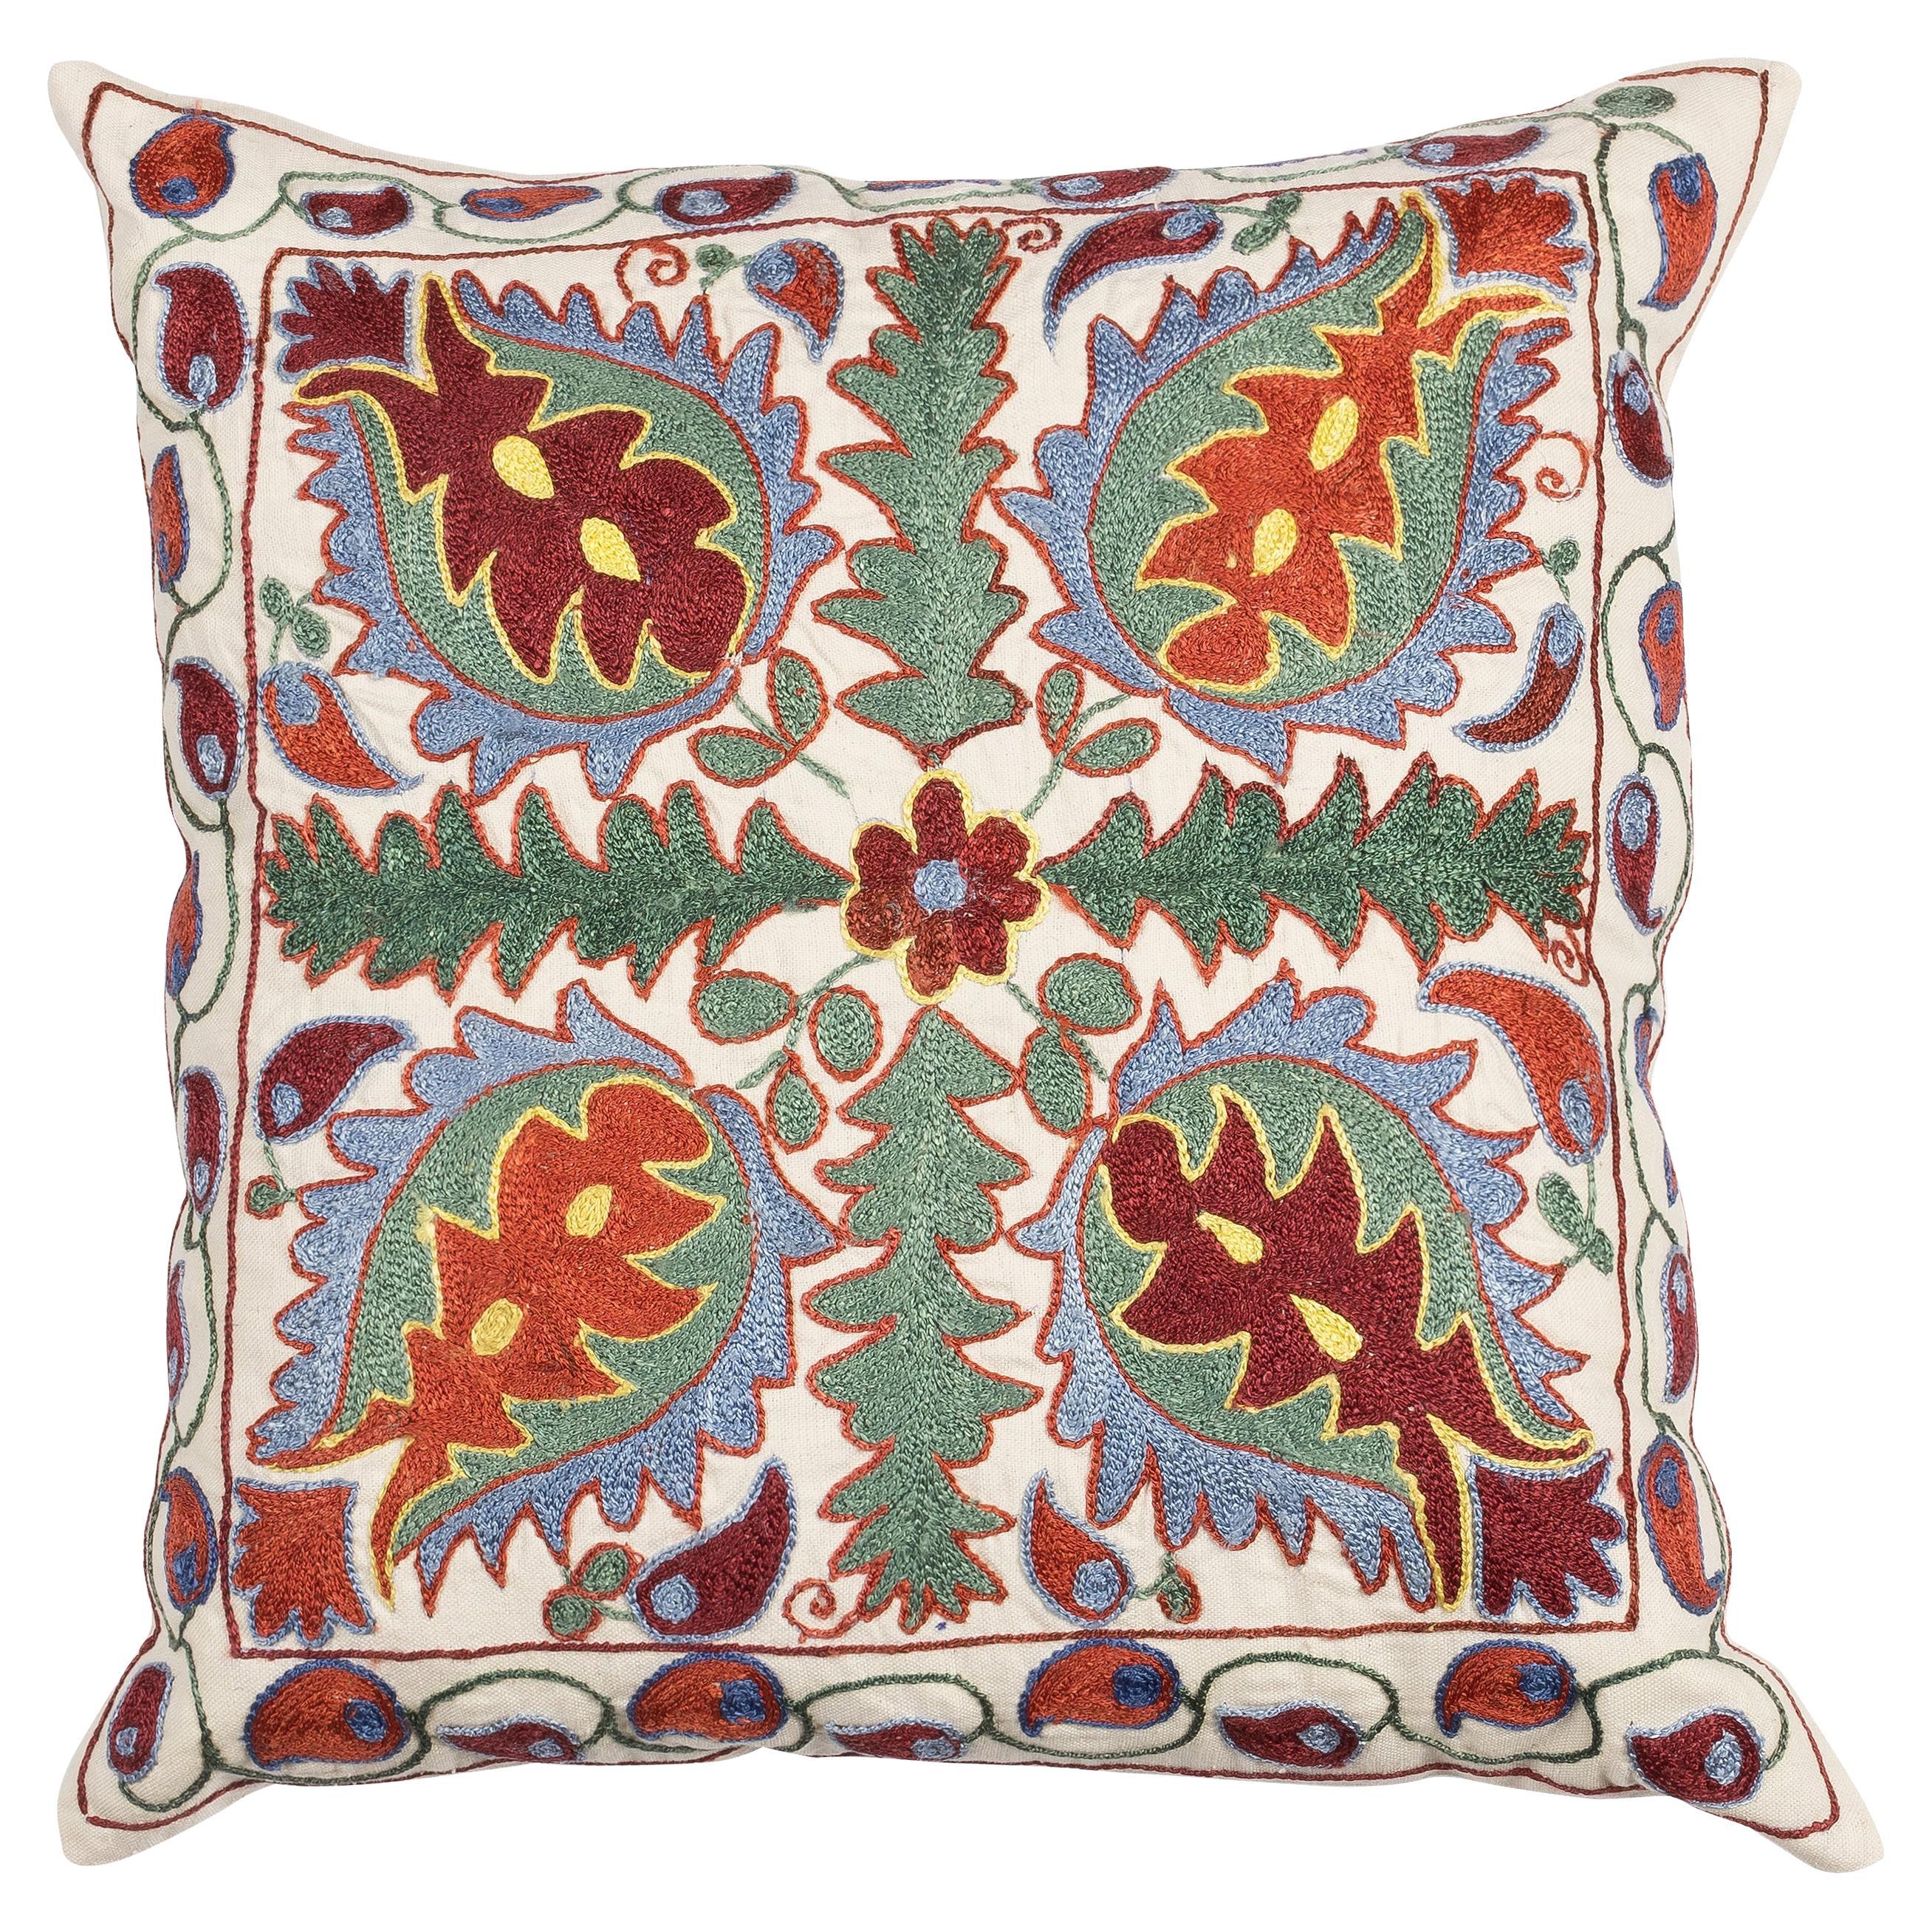 19"x19" Multicolor Silk Throw Pillow, Hand Embroidered Cushion Cover, Uzbek Sham